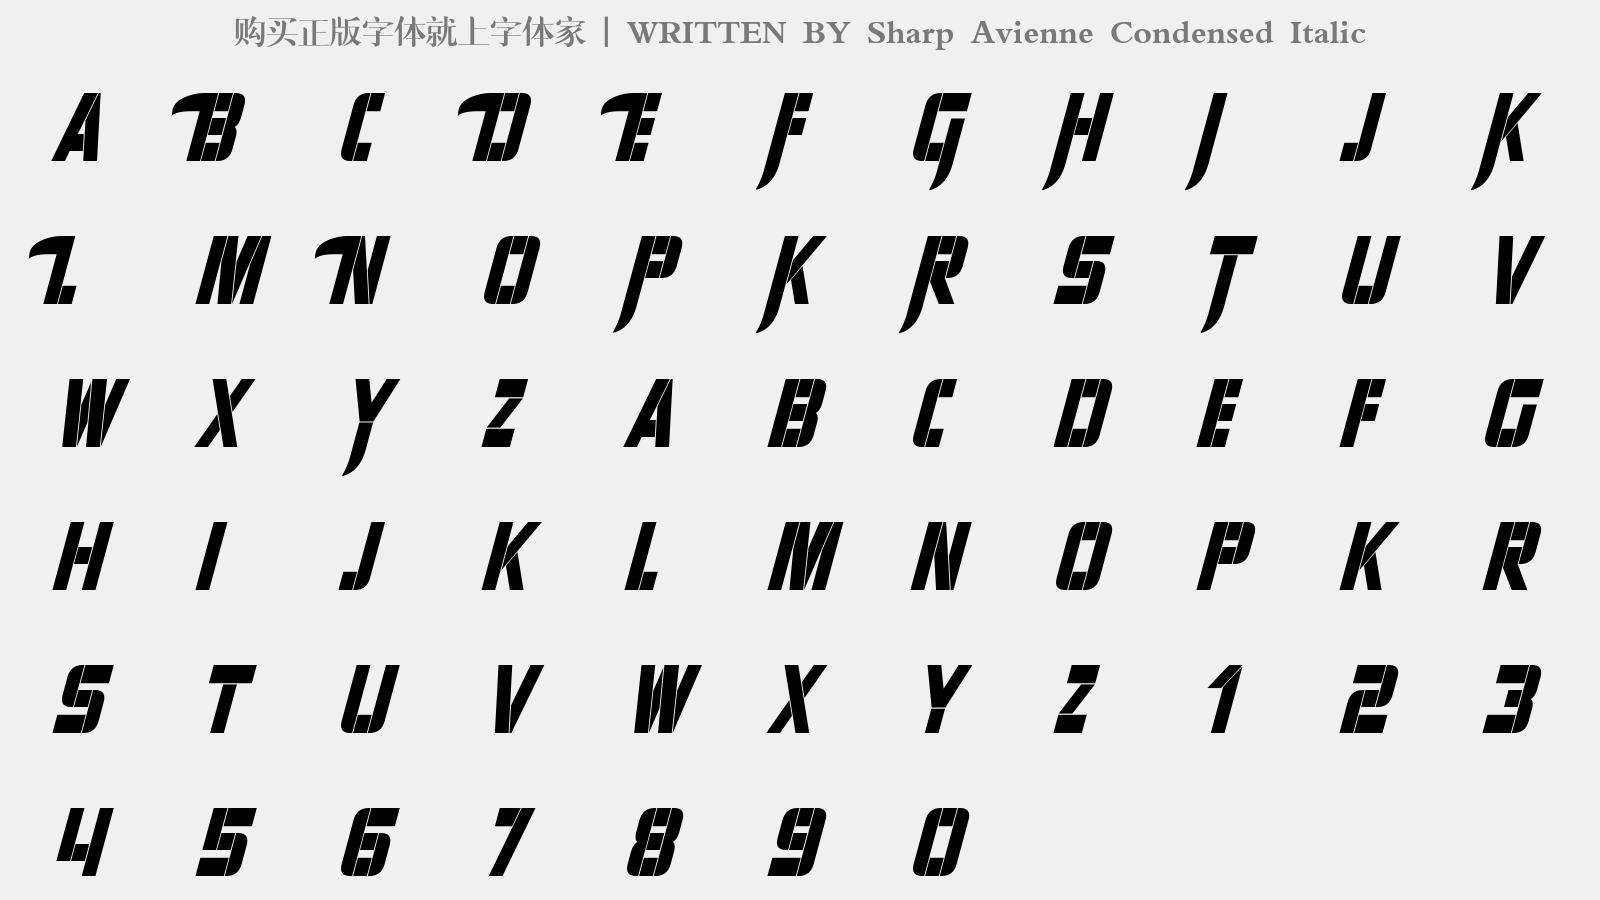 Sharp Avienne Condensed Italic - 大写字母/小写字母/数字